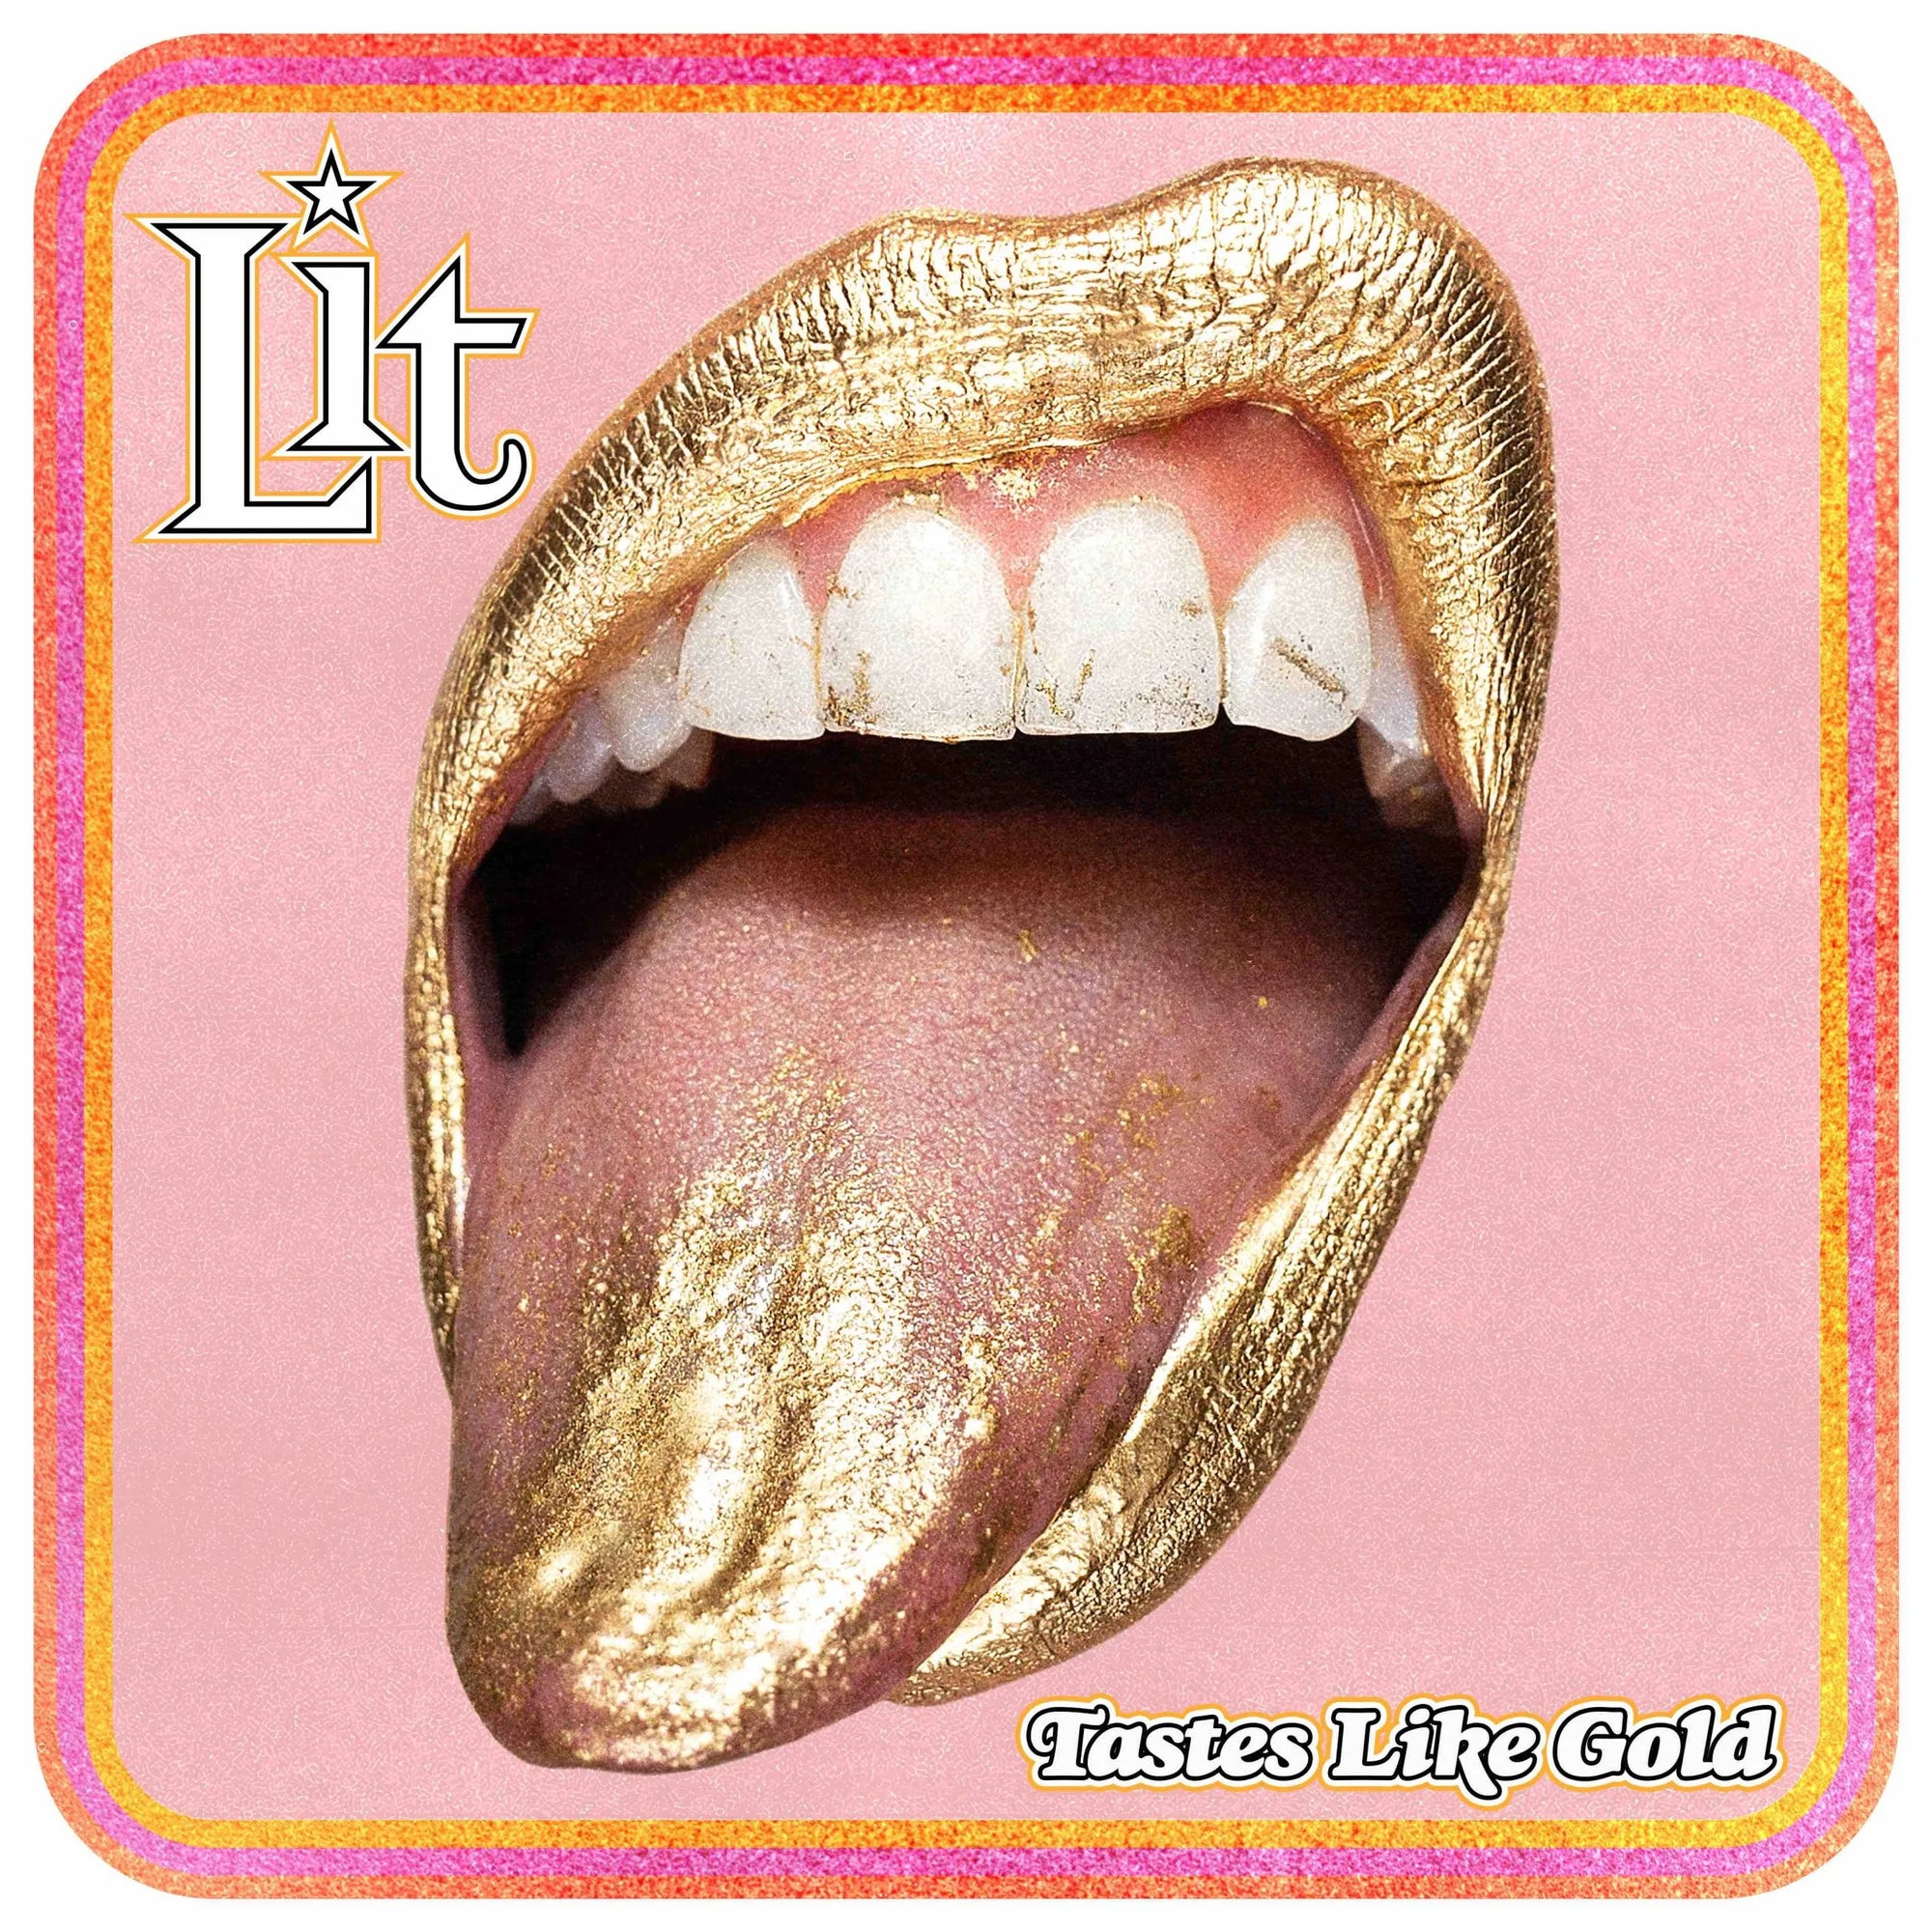 Lit - Tastes Like Gold (Vinyl LP)